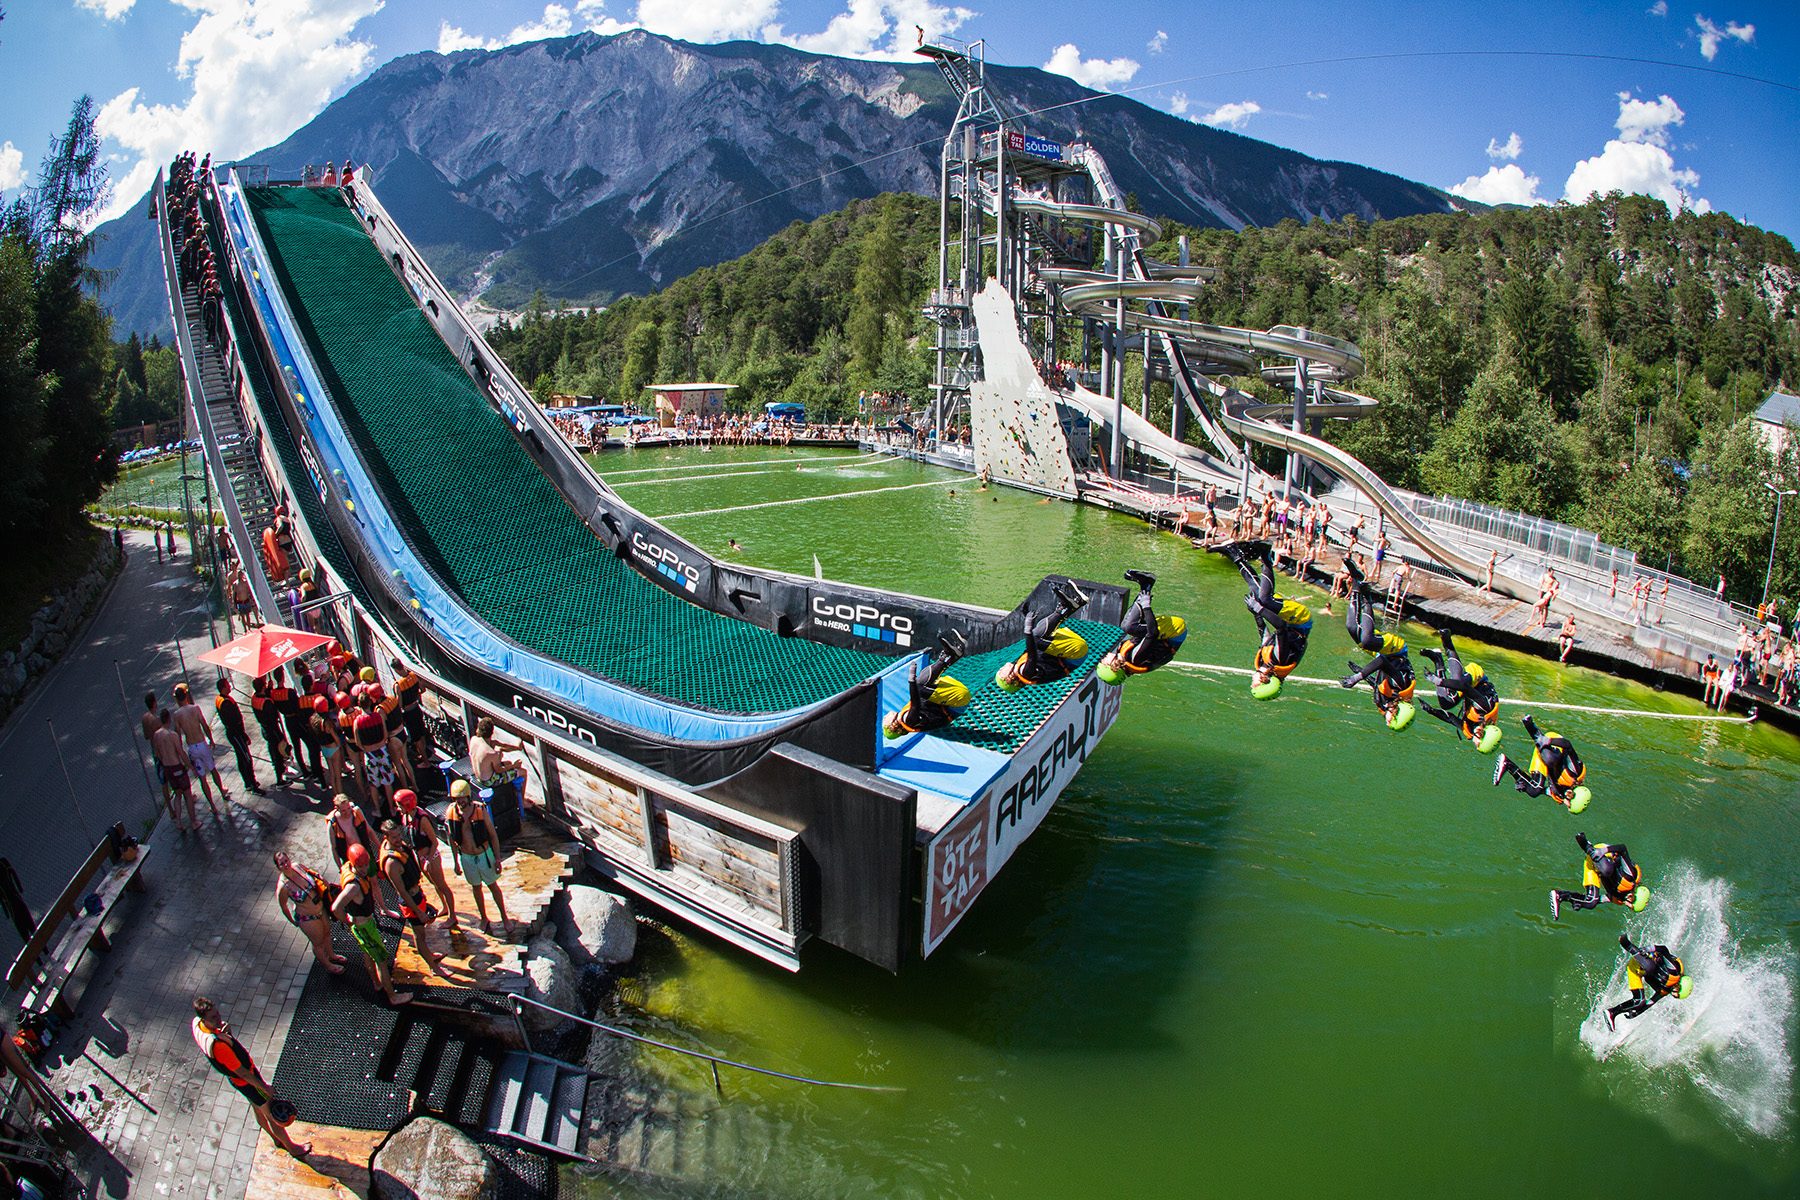 Area47 Water AREA Slip'n'slide- Photo courtesy www.AREA47.com . Area47 in Tirol